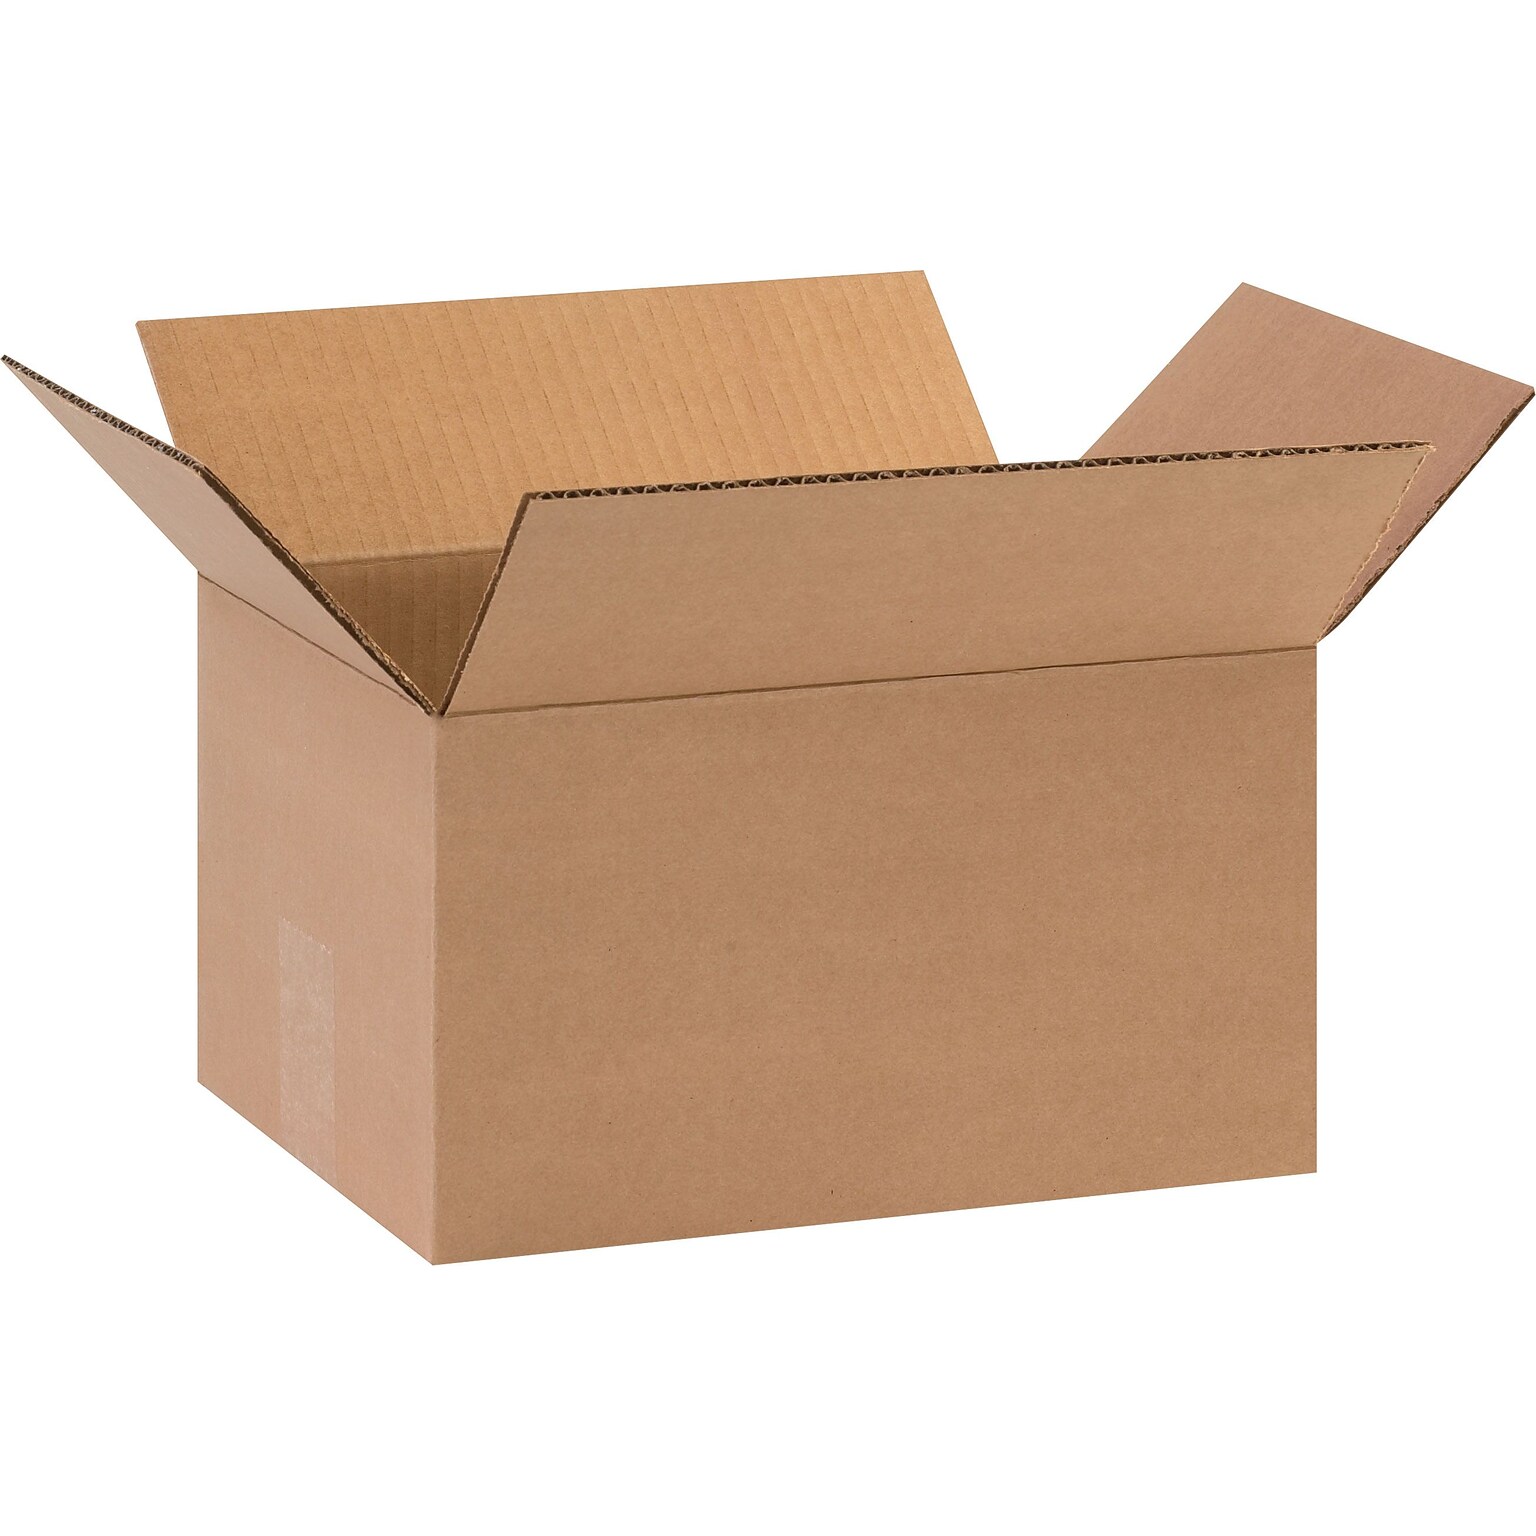 11 x 8 x 6 Shipping Boxes, 32 ECT, Brown, 25/Bundle (1186)